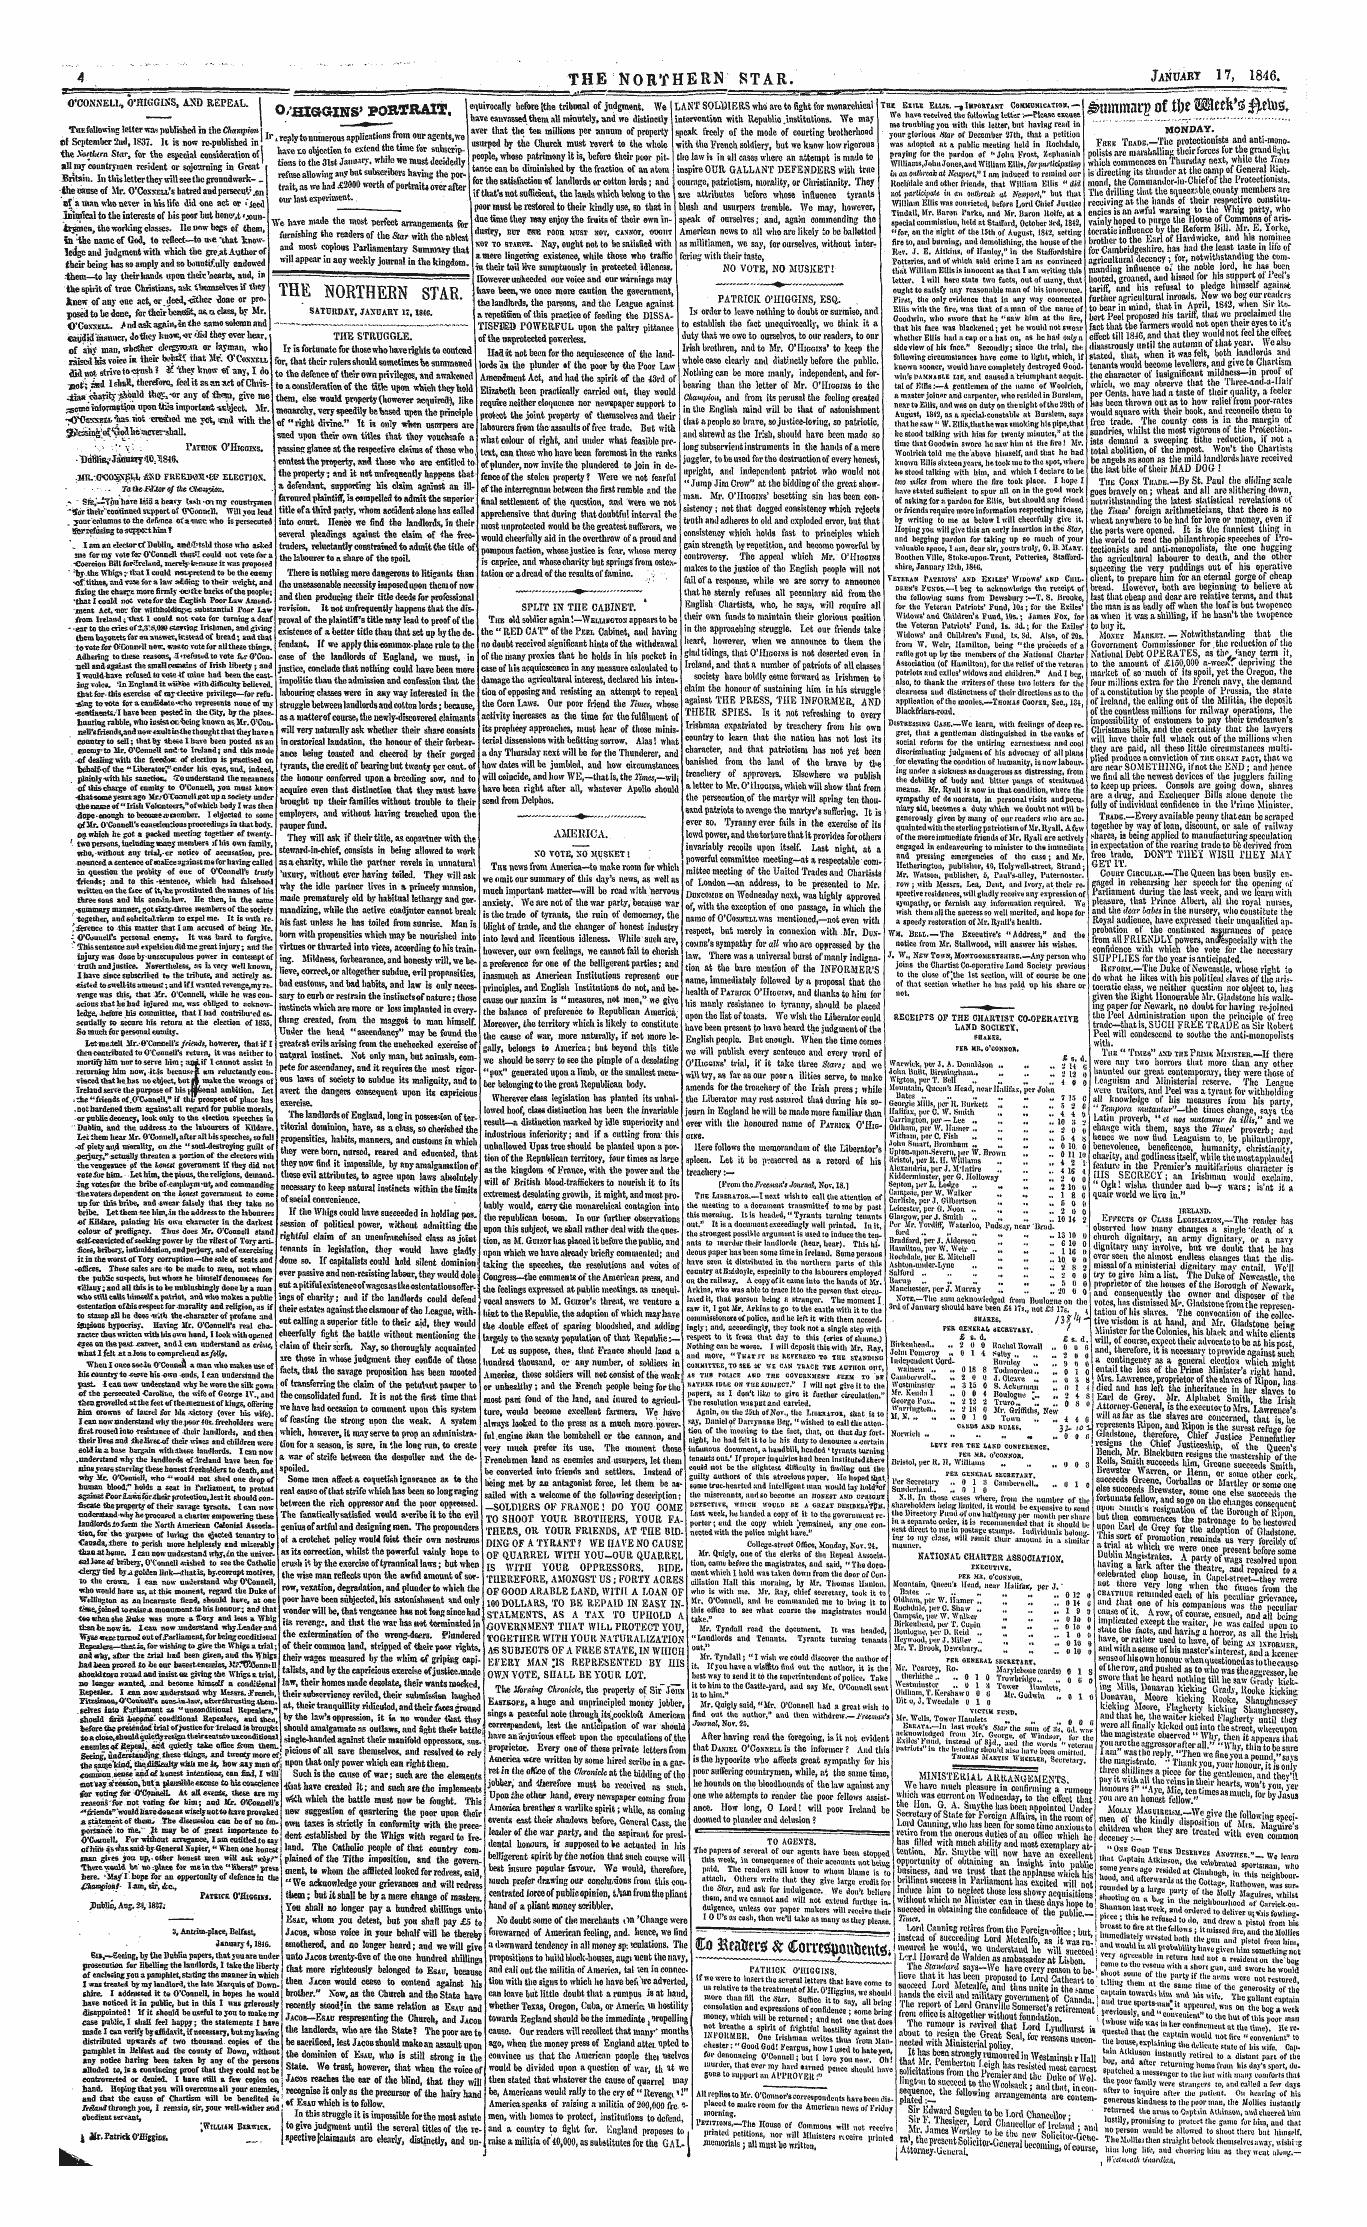 Northern Star (1837-1852): jS F Y, 1st edition - The Flortheen Star. Saturday, Jaxdart 17,1846.